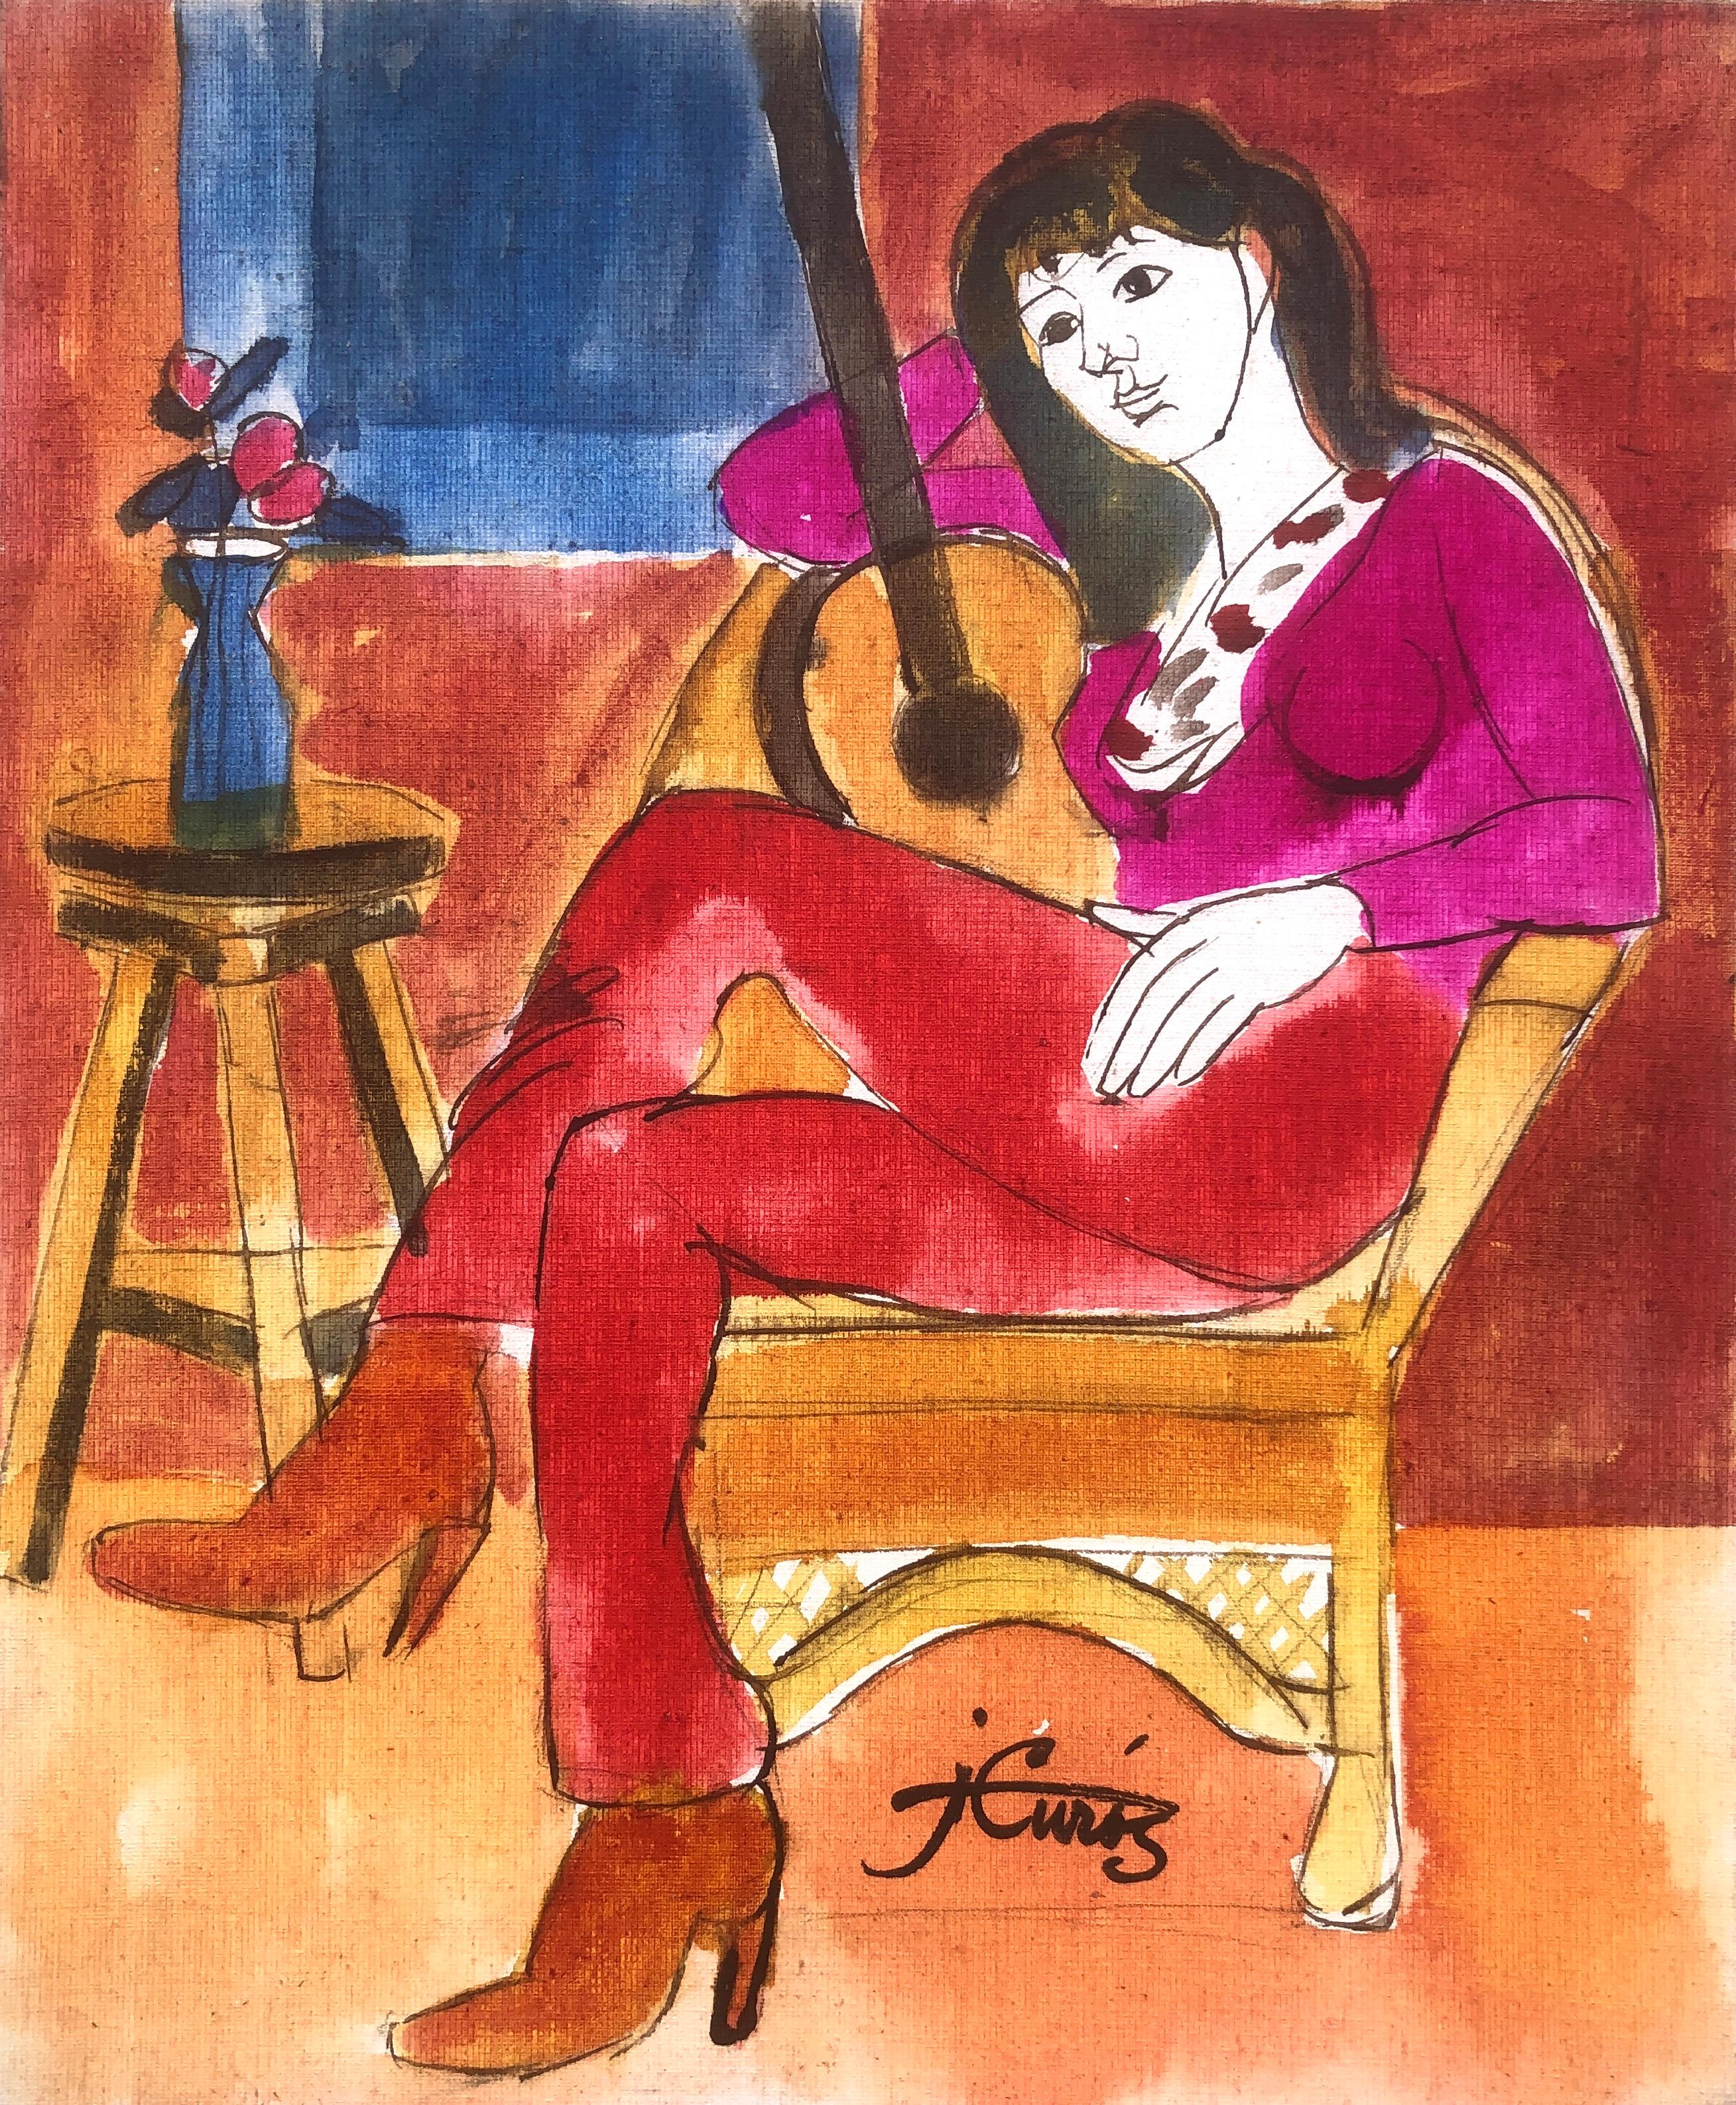 Jordi Curos Portrait Painting - Woman posing with guitar mixed media painting